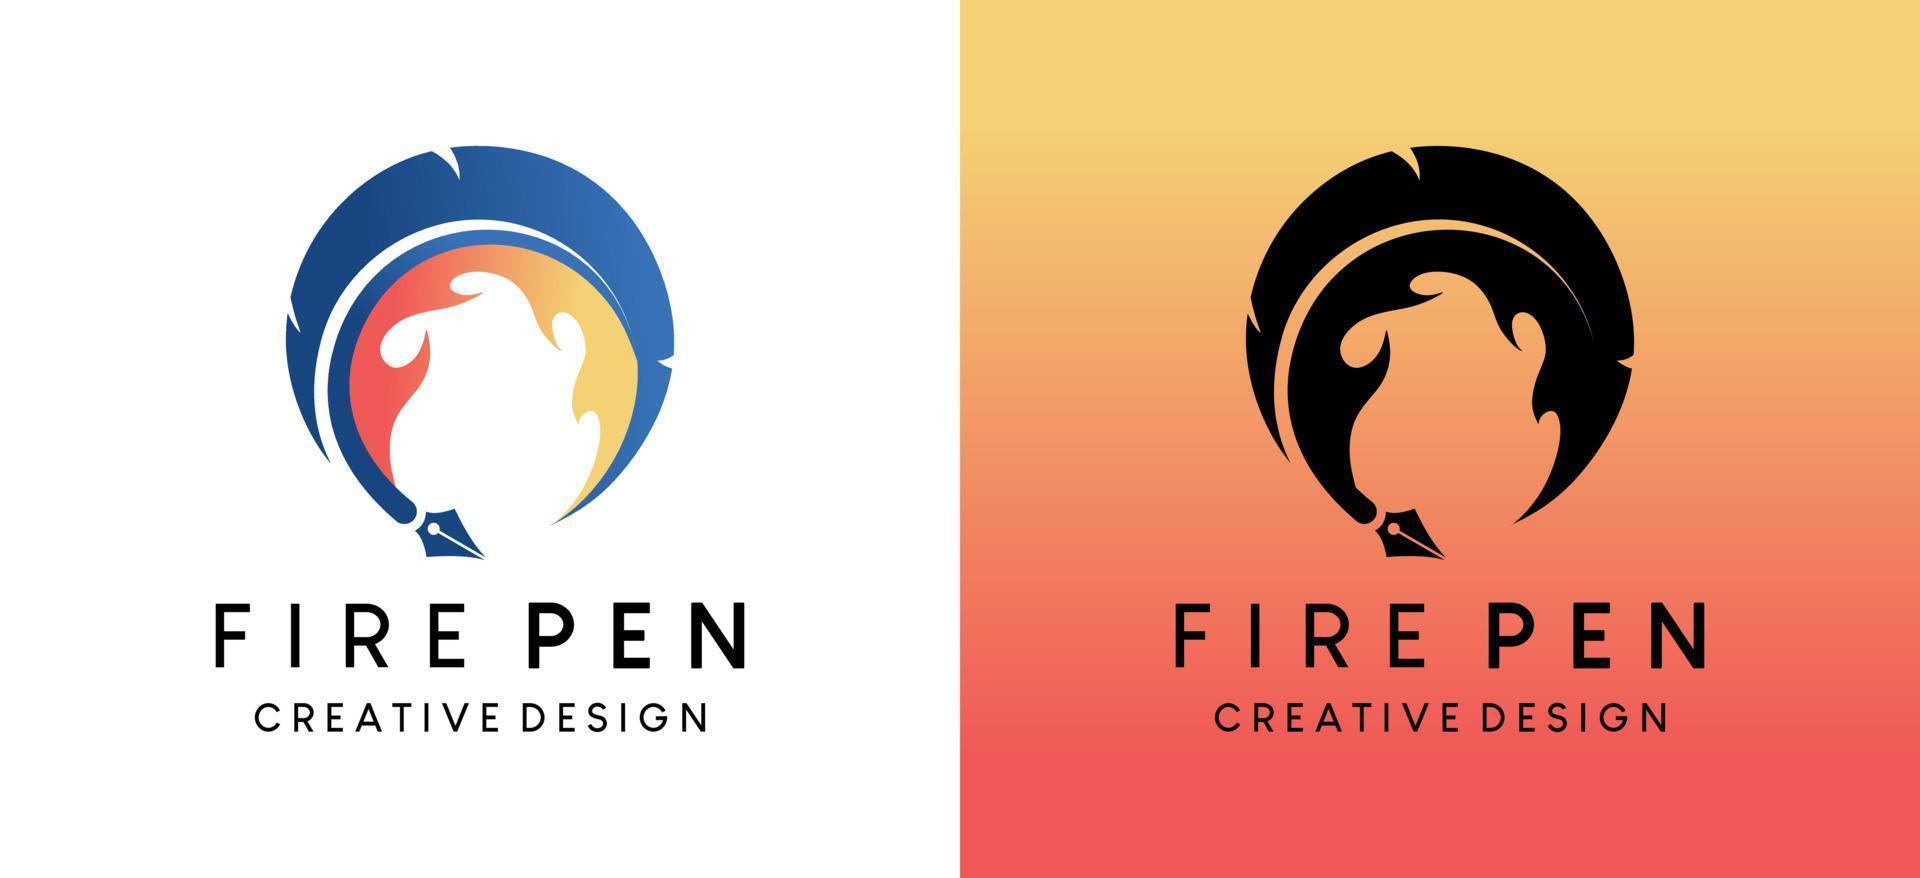 Pen logo design with fire concept, vector illustration